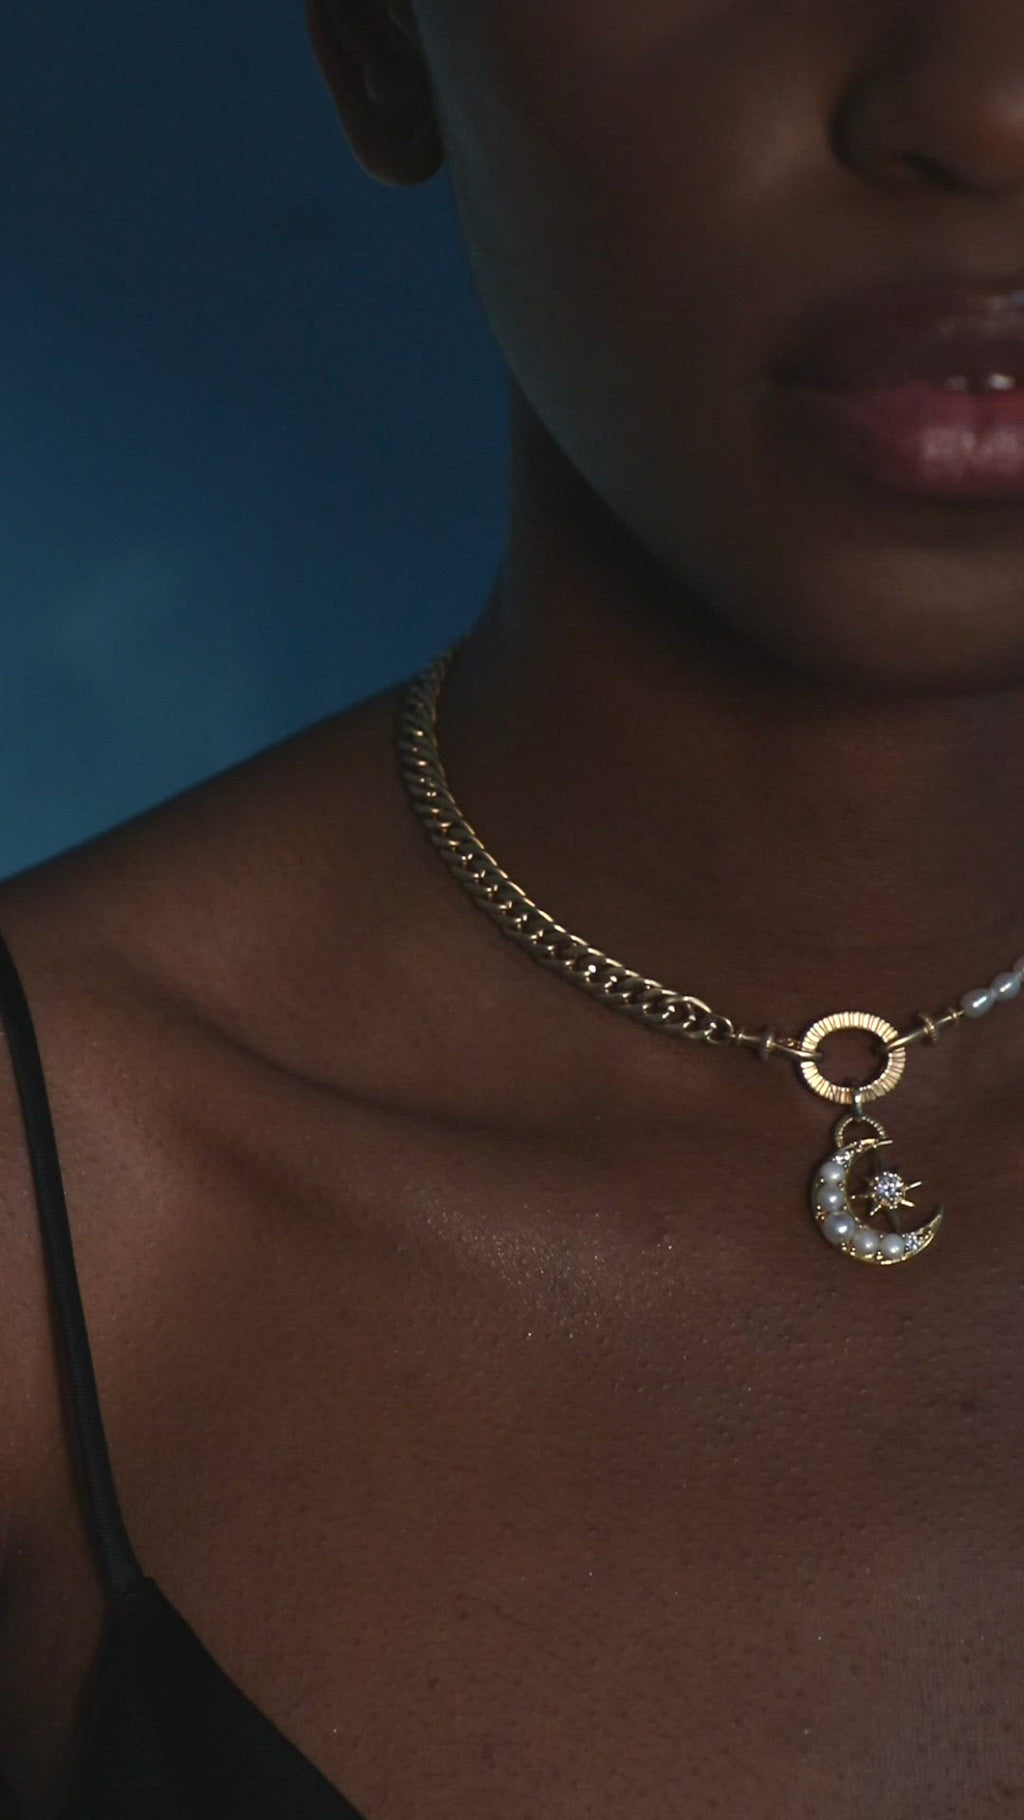 Raven James LUNA Pendant worn with DUSK chain bracelet and AERIN pearl bracelet (worn together as a necklace) 